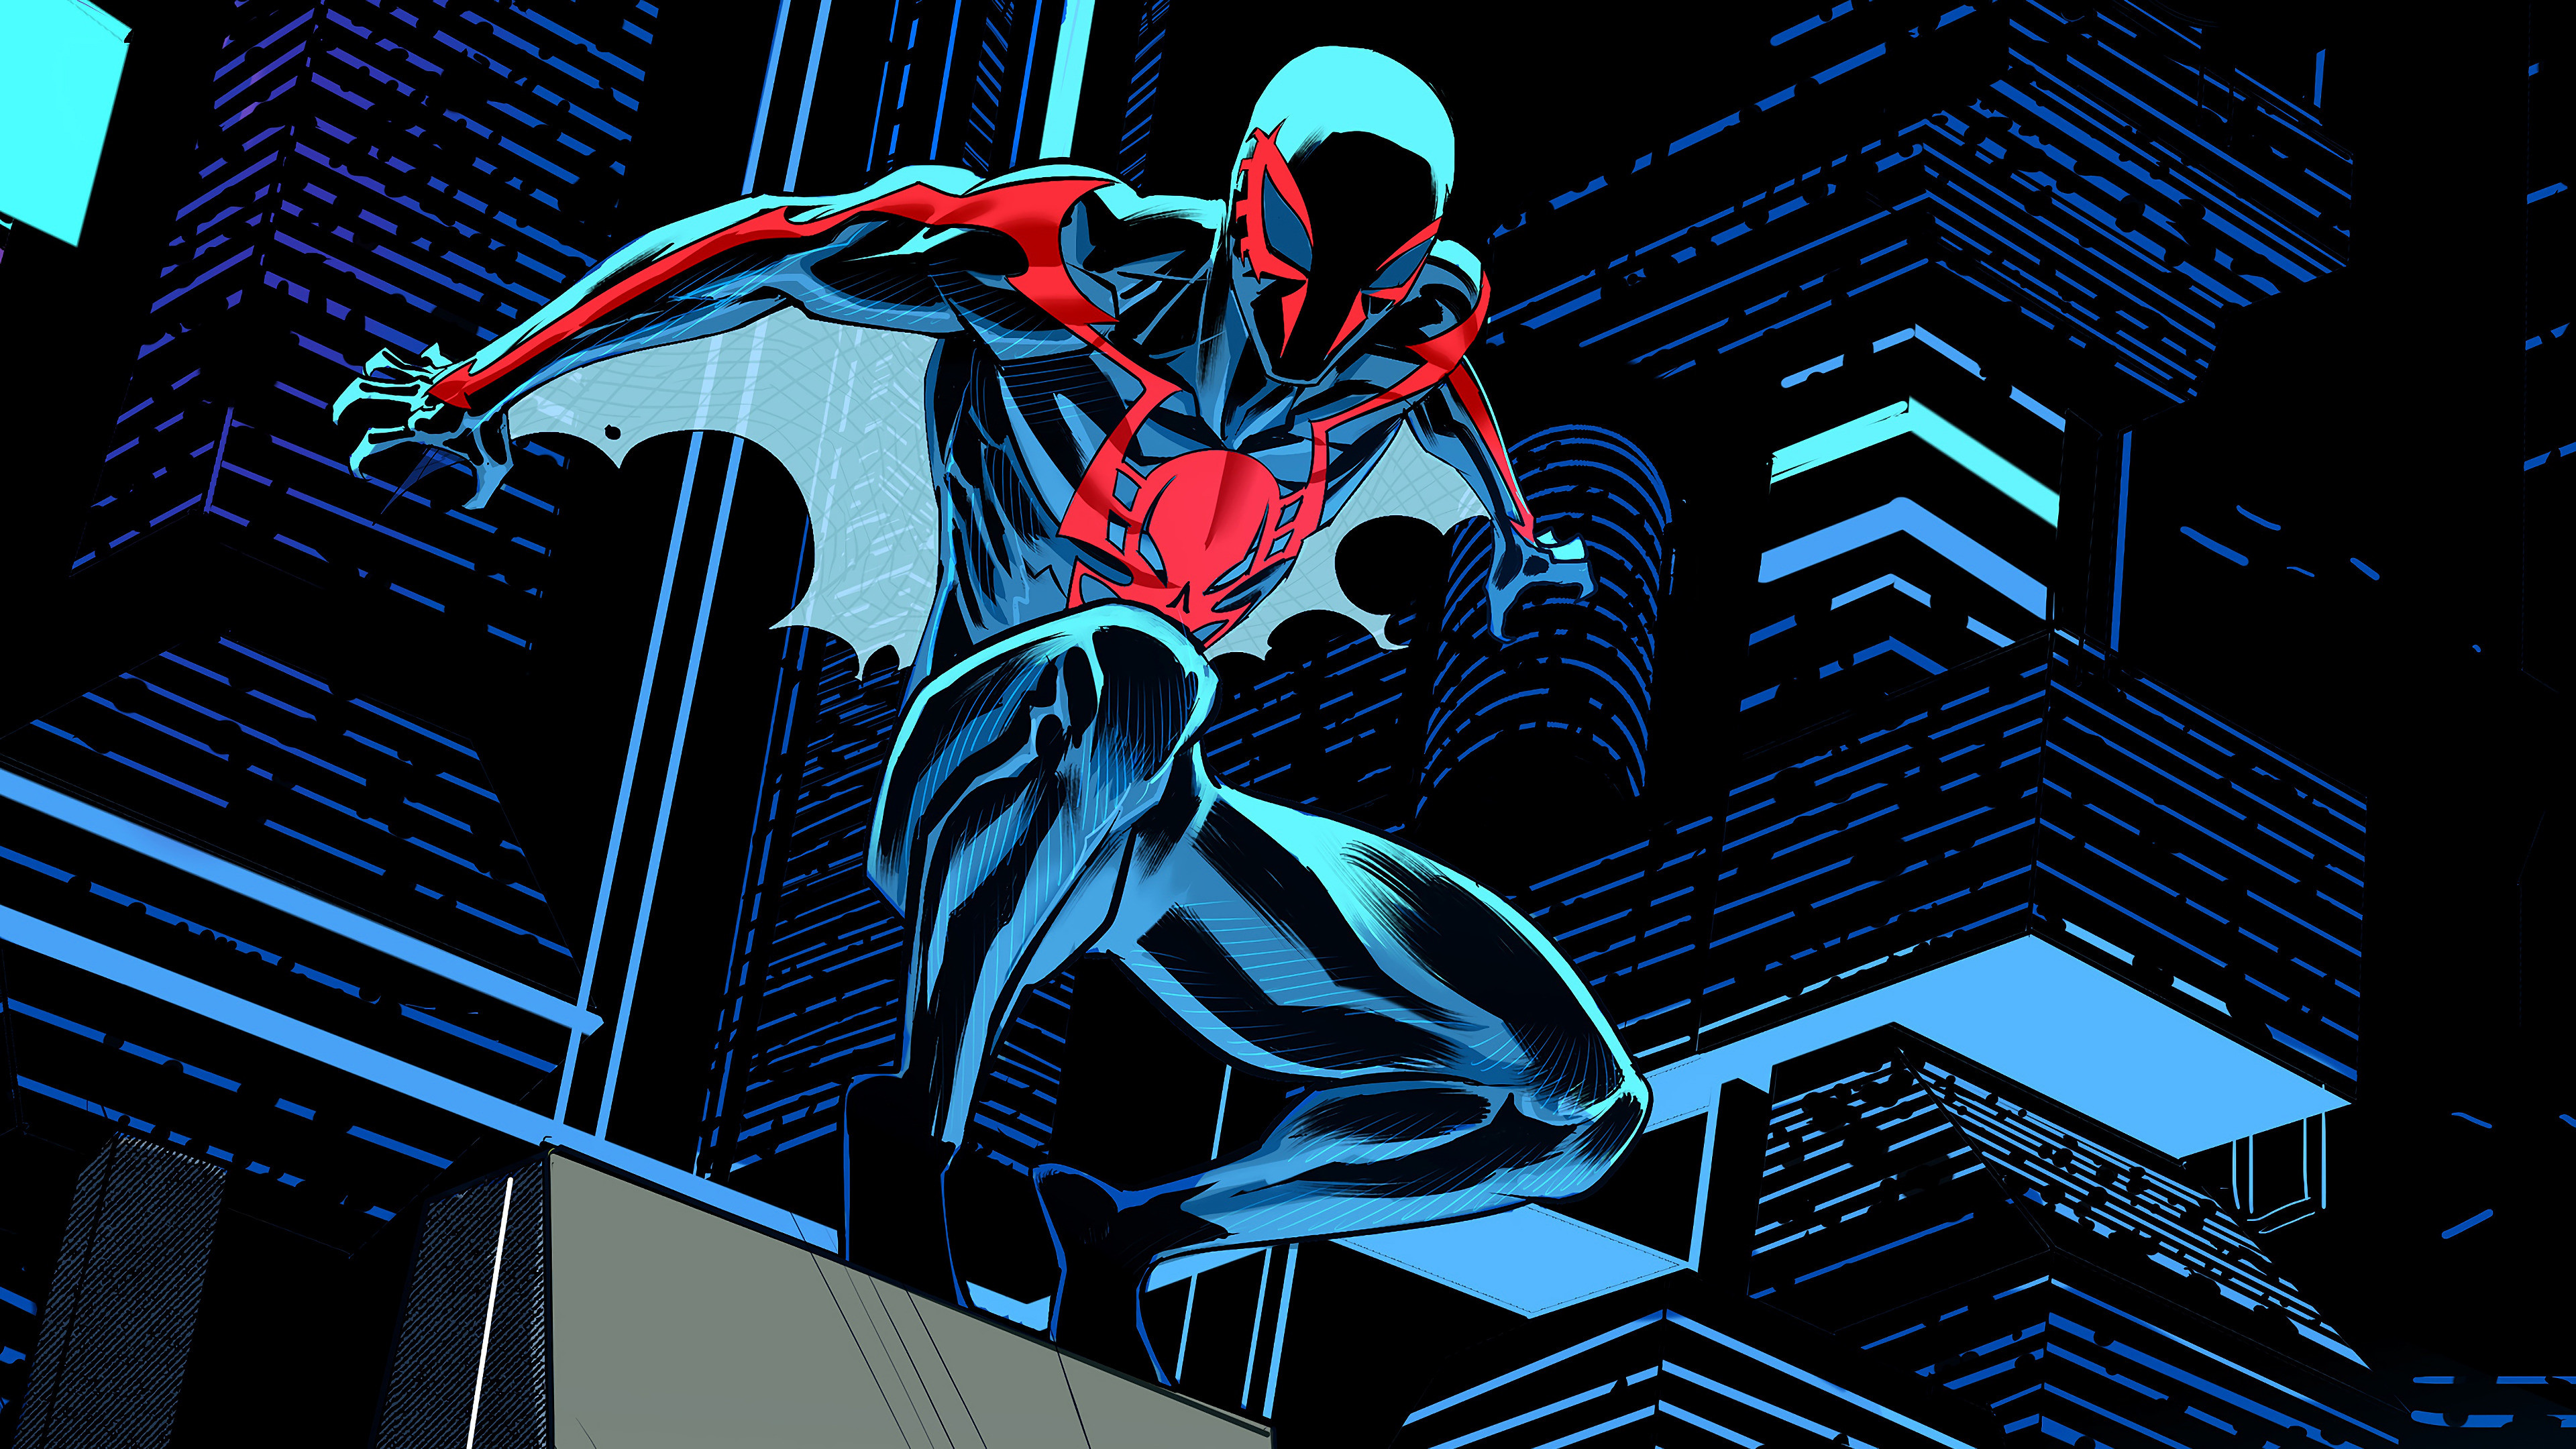 Spiderman 2099 Vs Batman Beyond Wallpapers